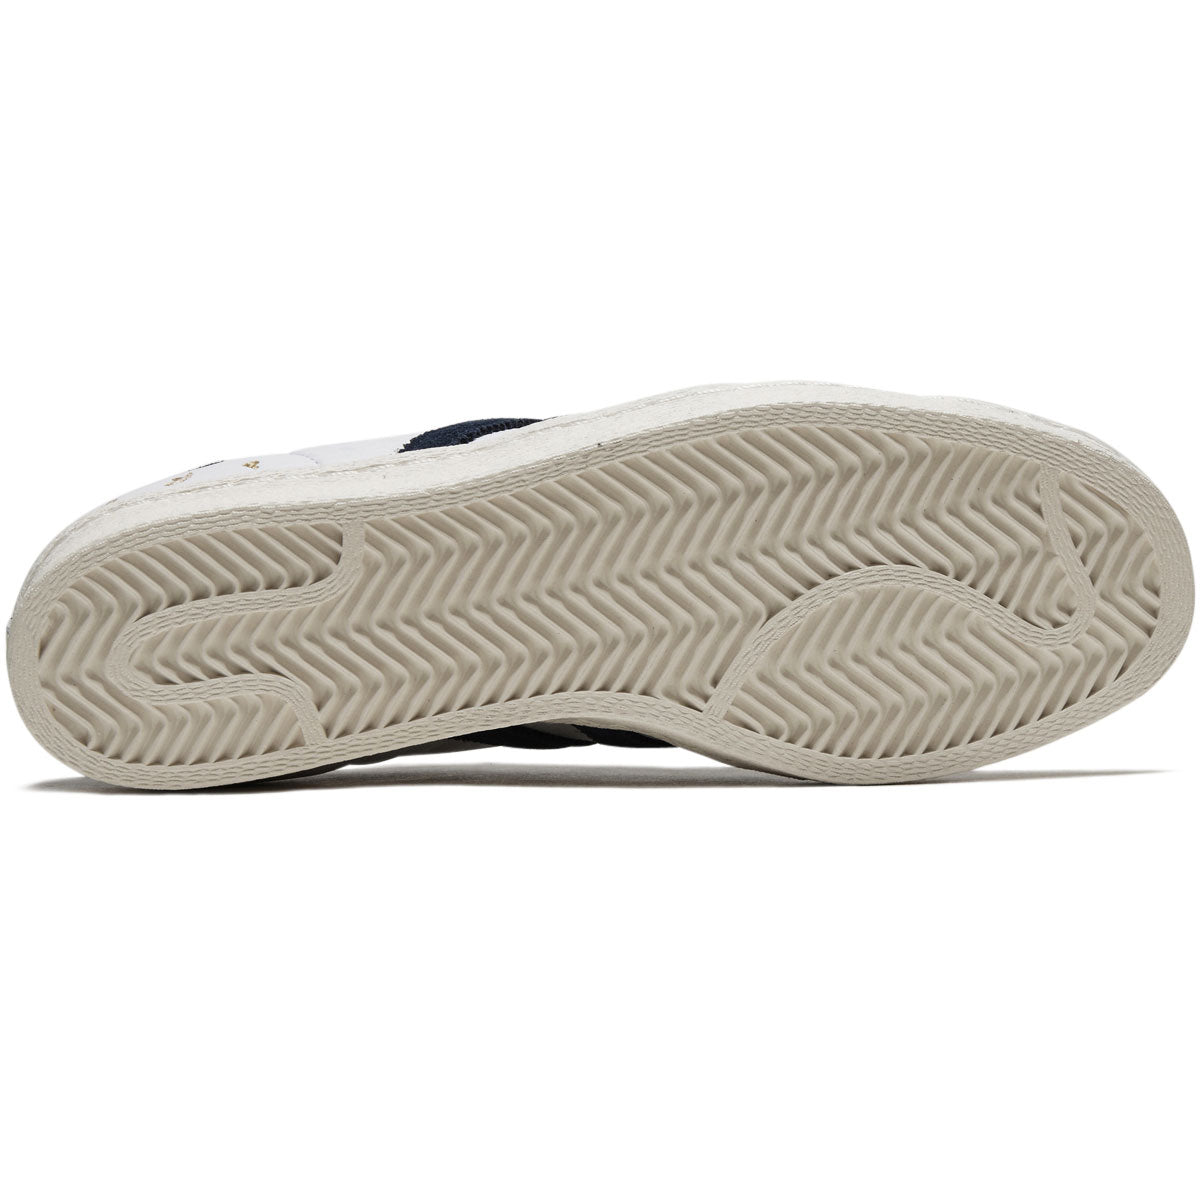 Adidas x Pop Trading Co Superstar Adv Shoes - White/Collegiate Navy/Chalk White image 4